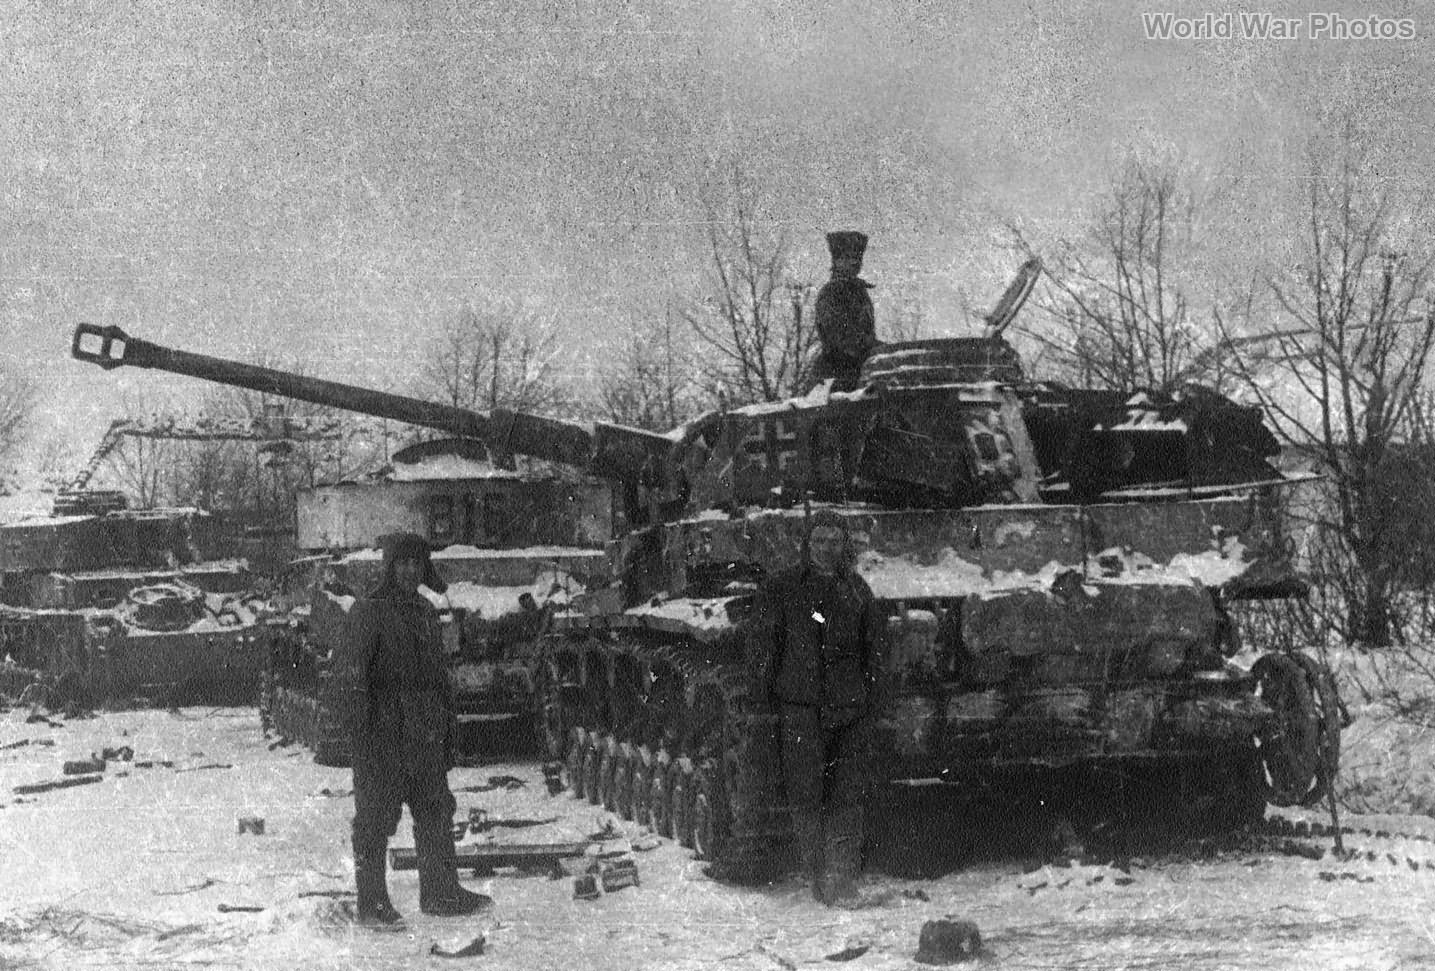 Captured Panzer IV Ausf H Eastern Front | World War Photos